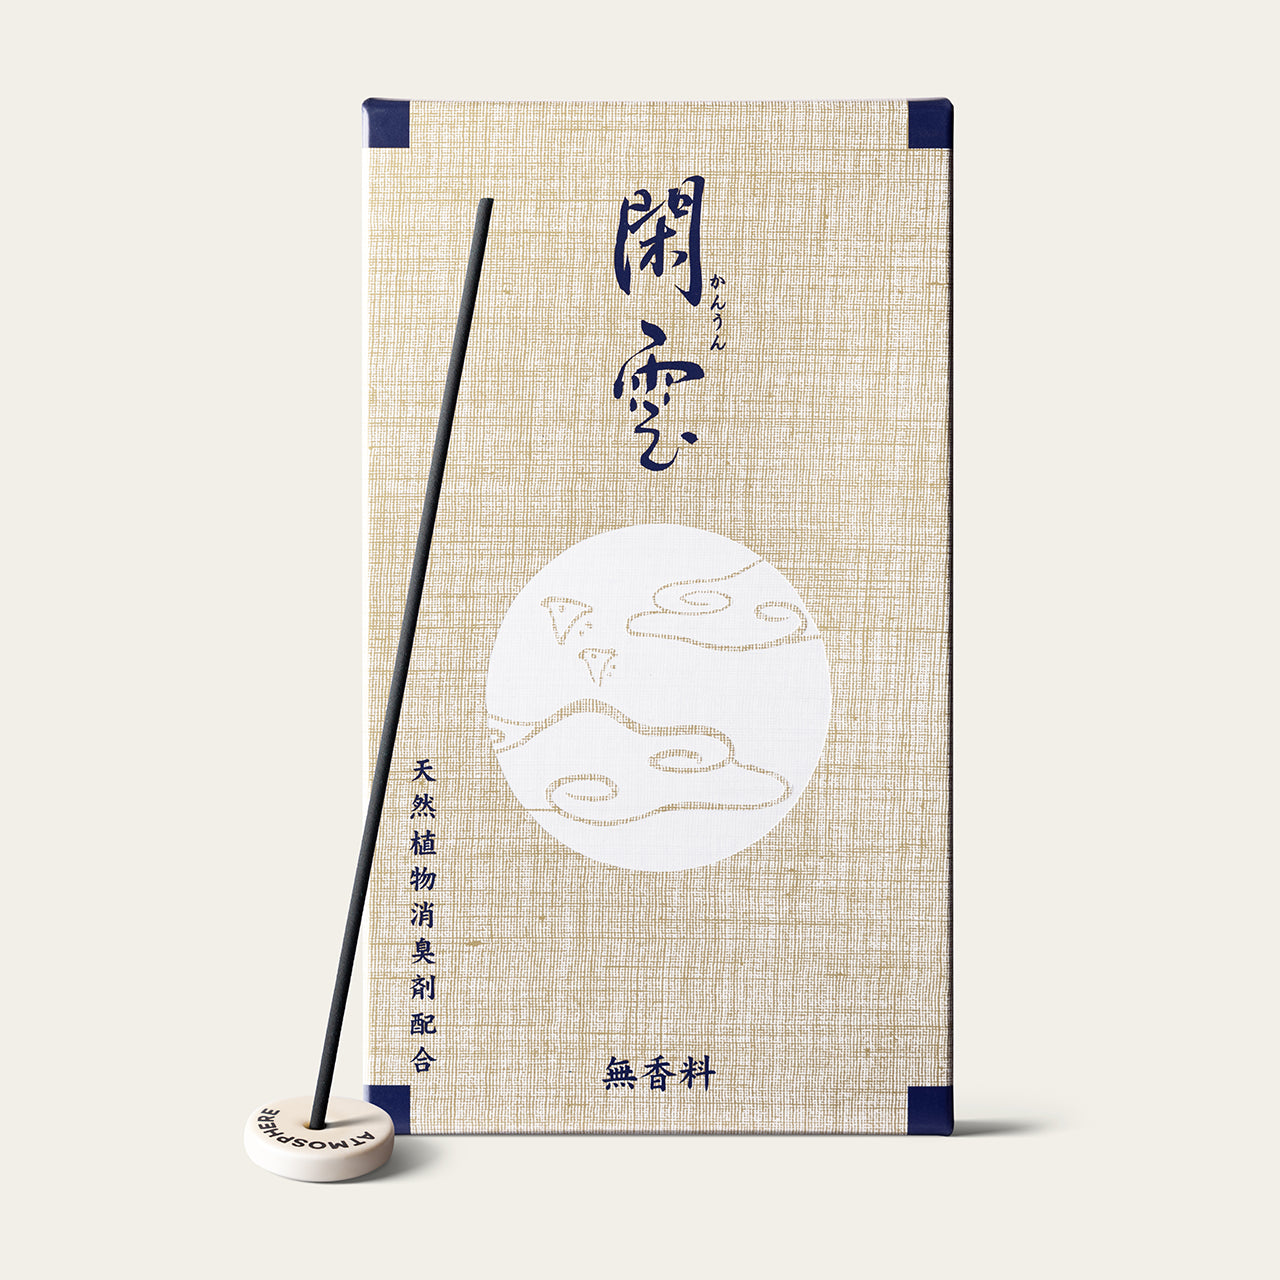 Shorindo Mellow Cloud Kanun Japanese incense sticks (150 sticks) with Atmosphere ceramic incense holder